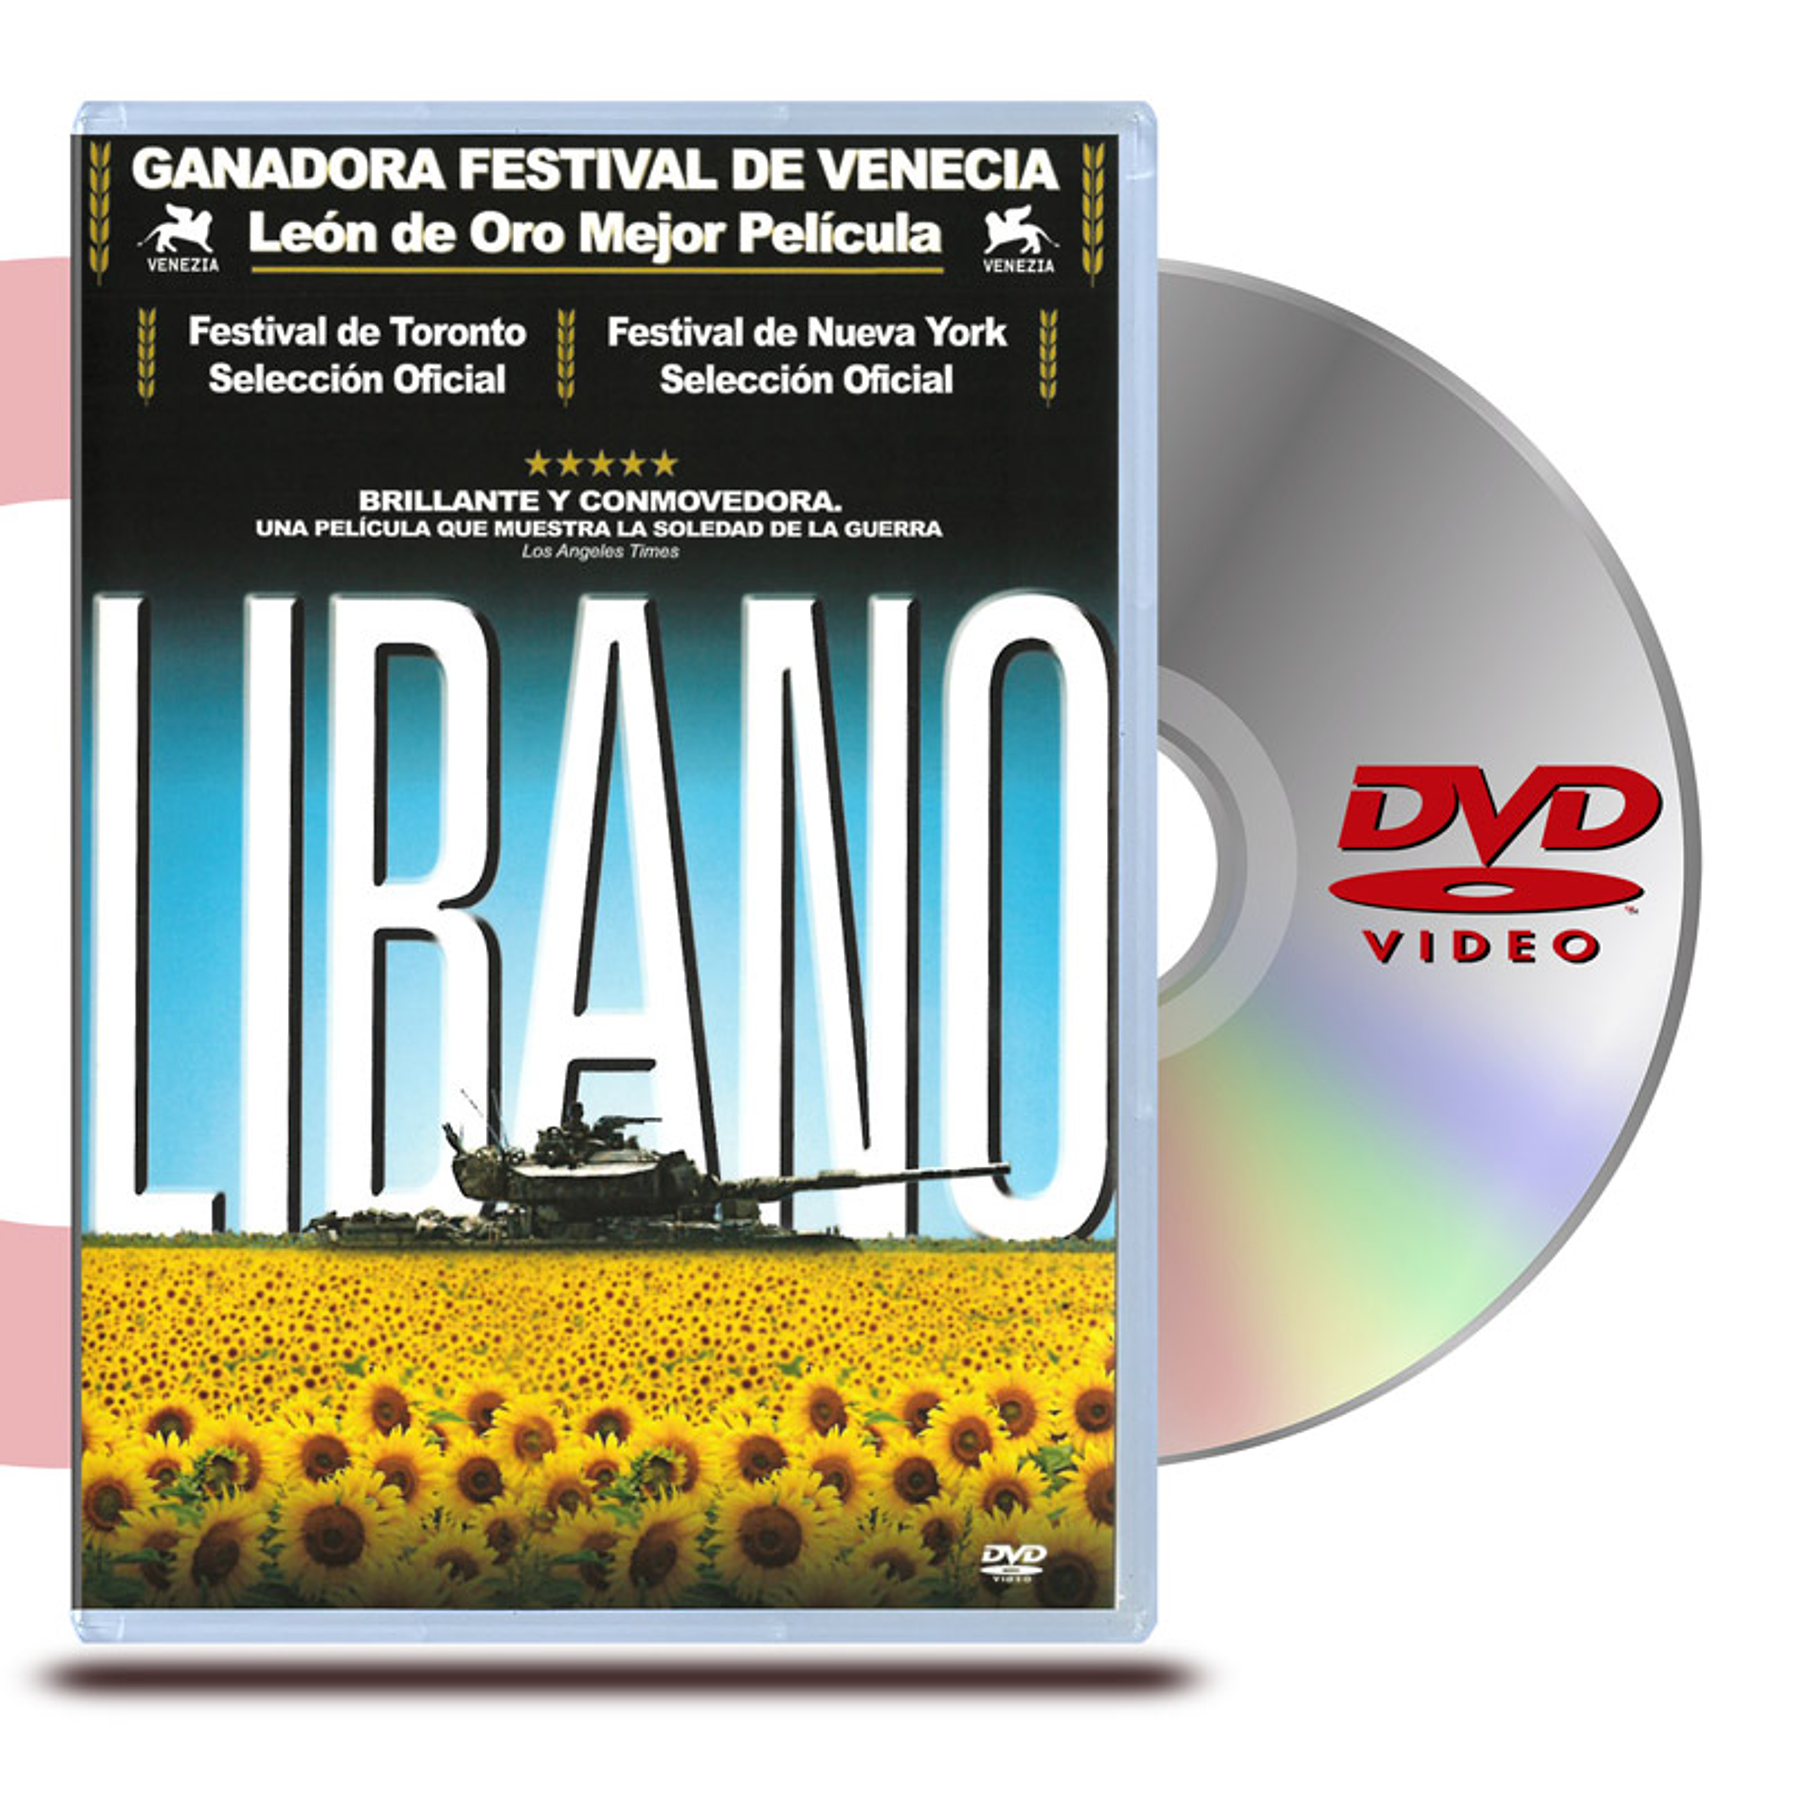 DVD Libano